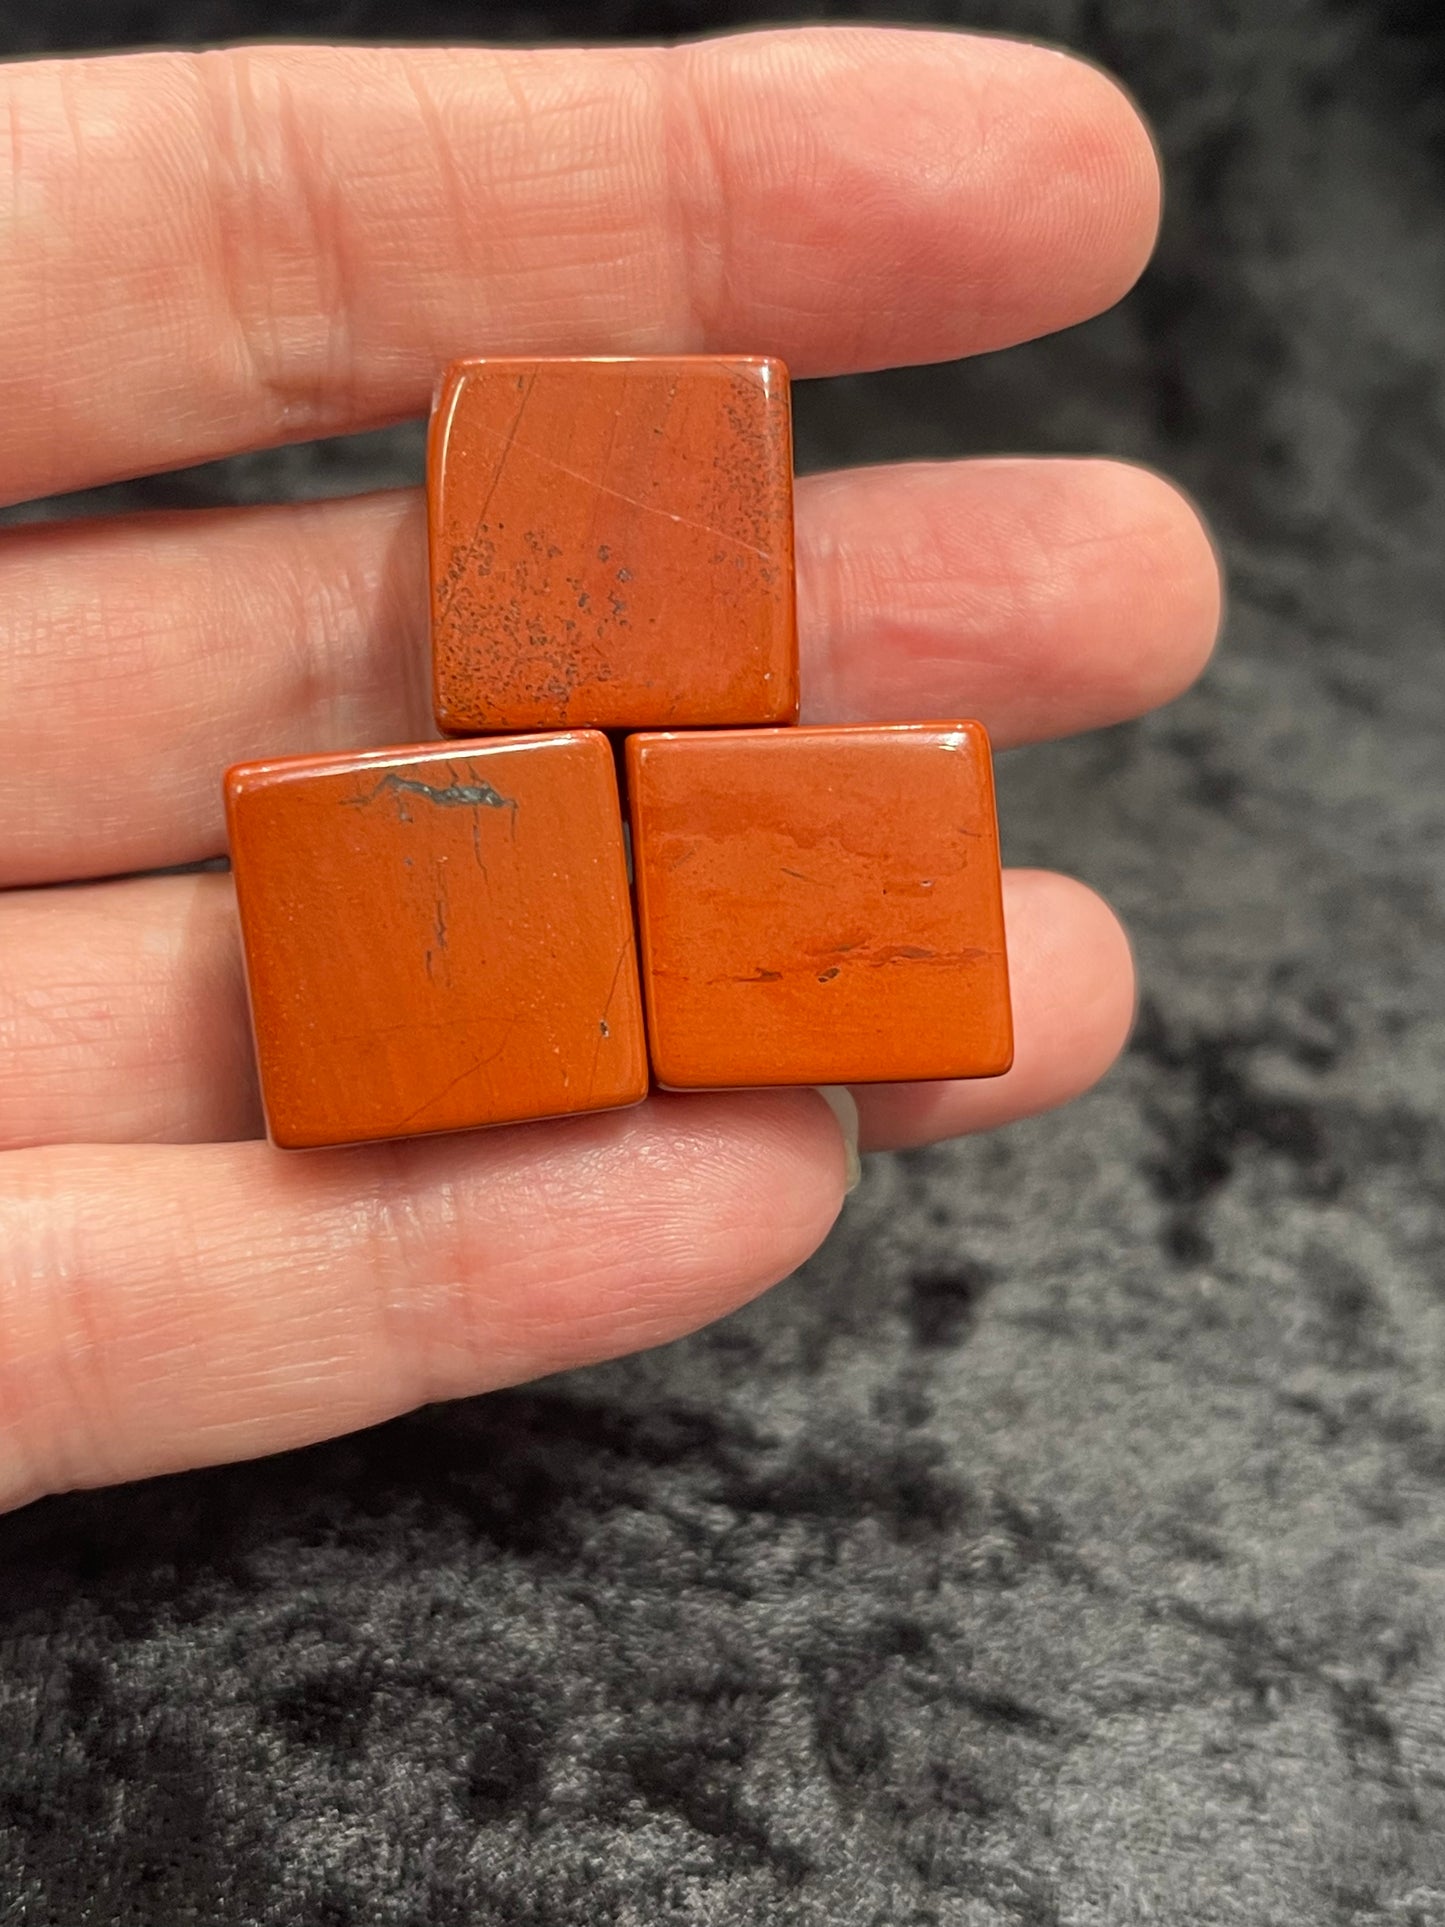 Red Jasper cubes